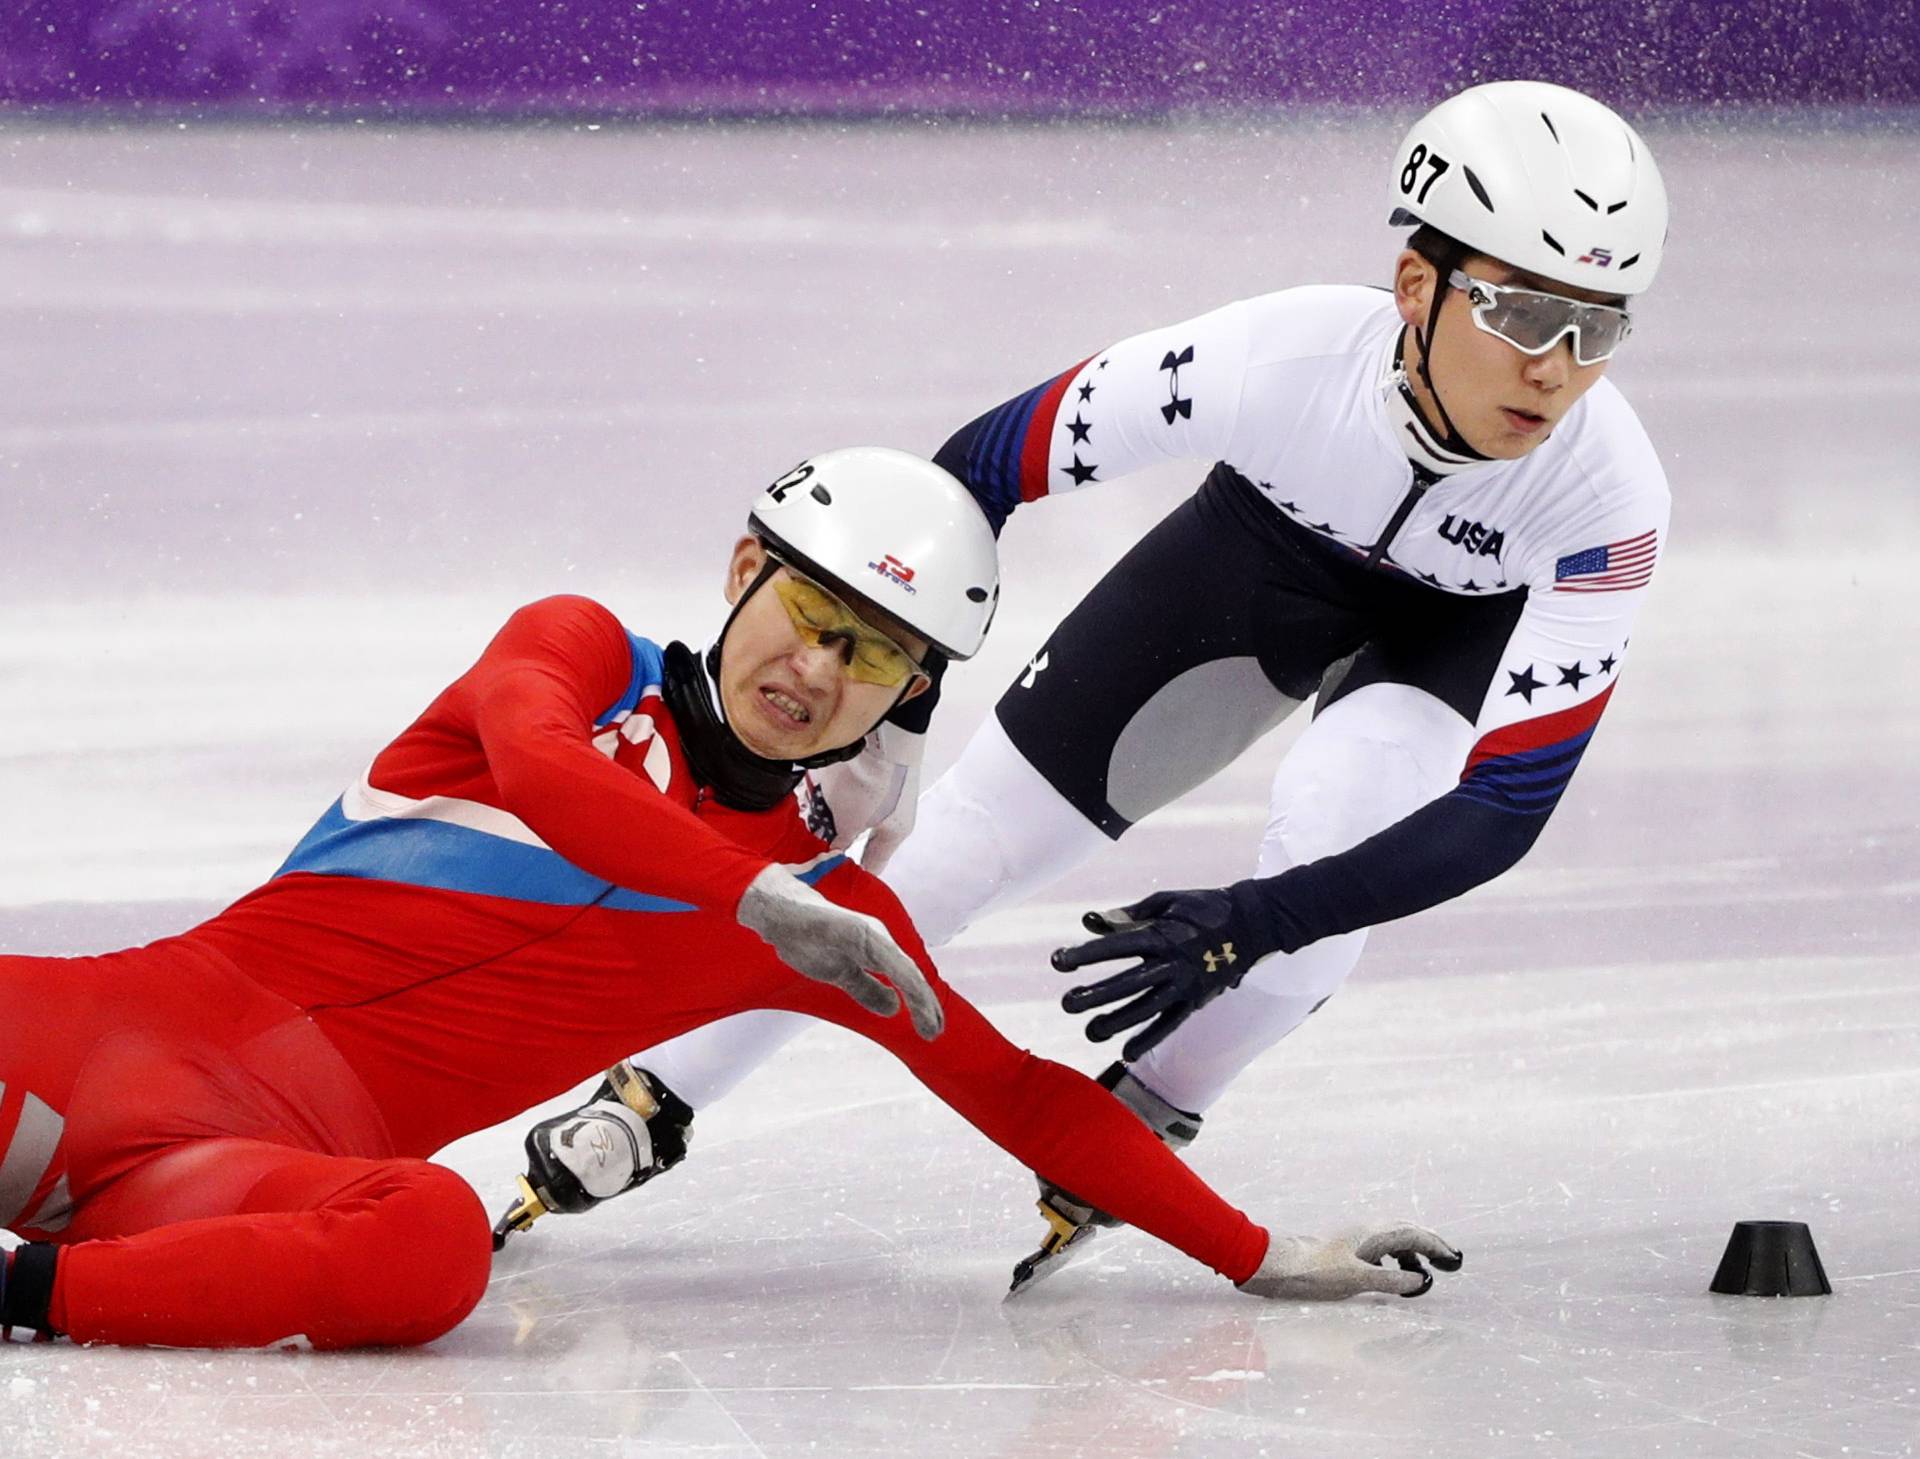 Pyeongchang 2018 Winter Olympics